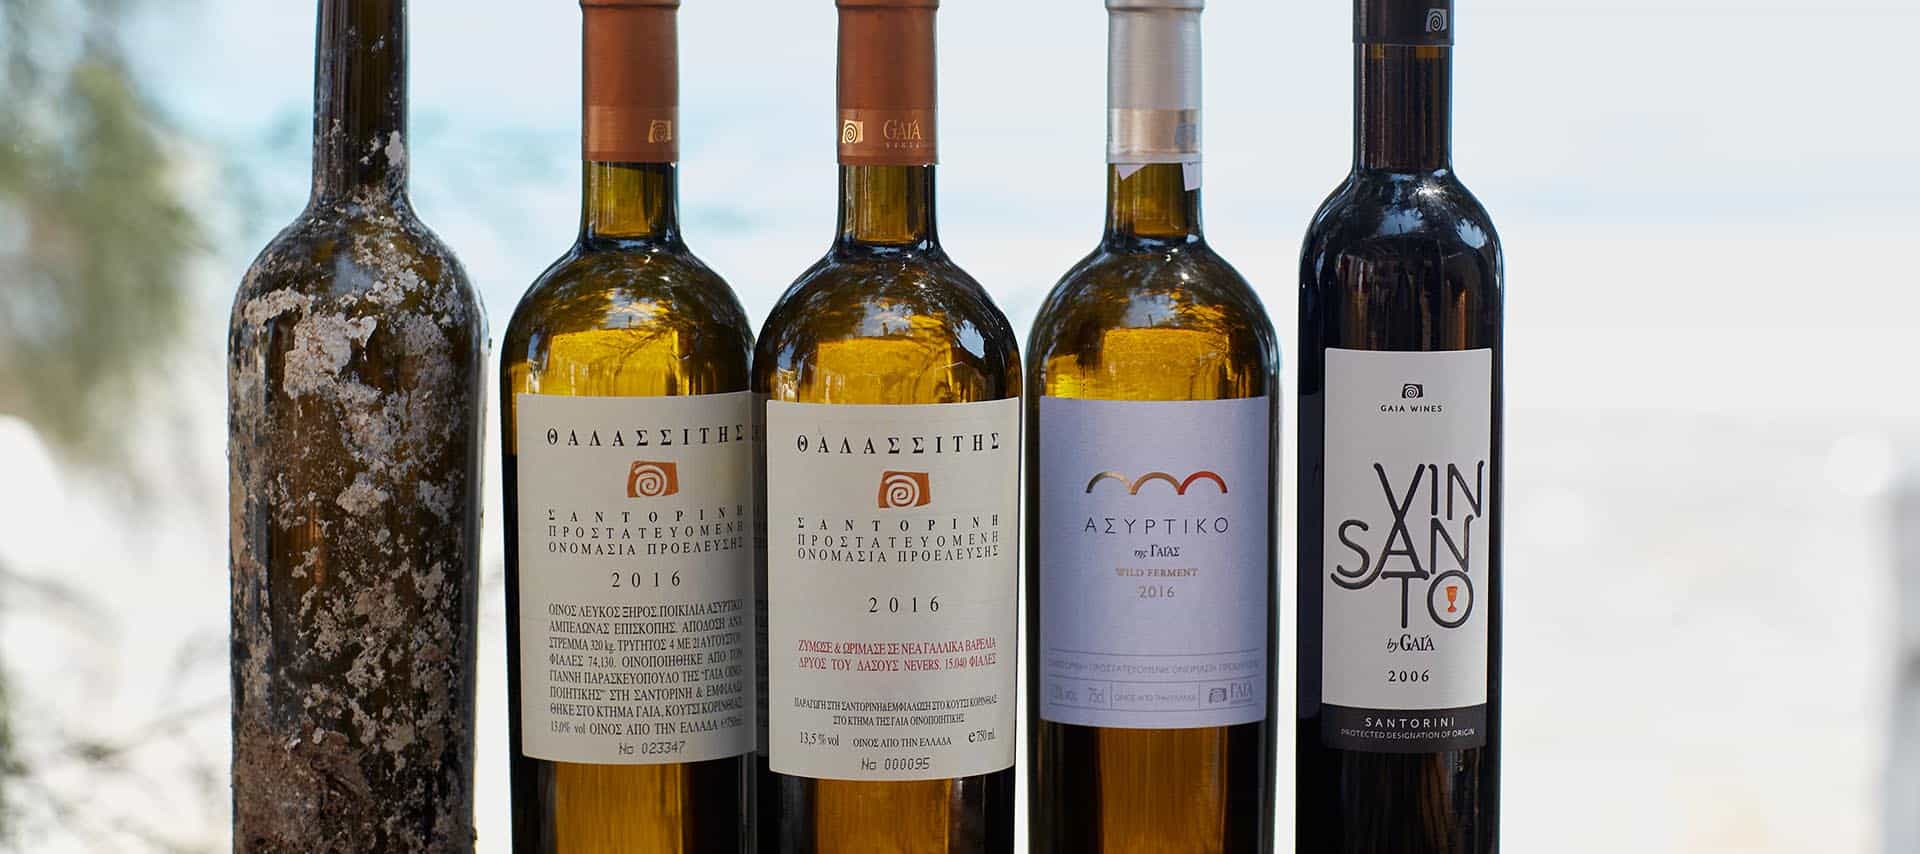 Вина греции купить в москве. Santorini Греция вино. Вино с острова Санторини. Вино Винсанто Санторини. Столовое греческое вино.